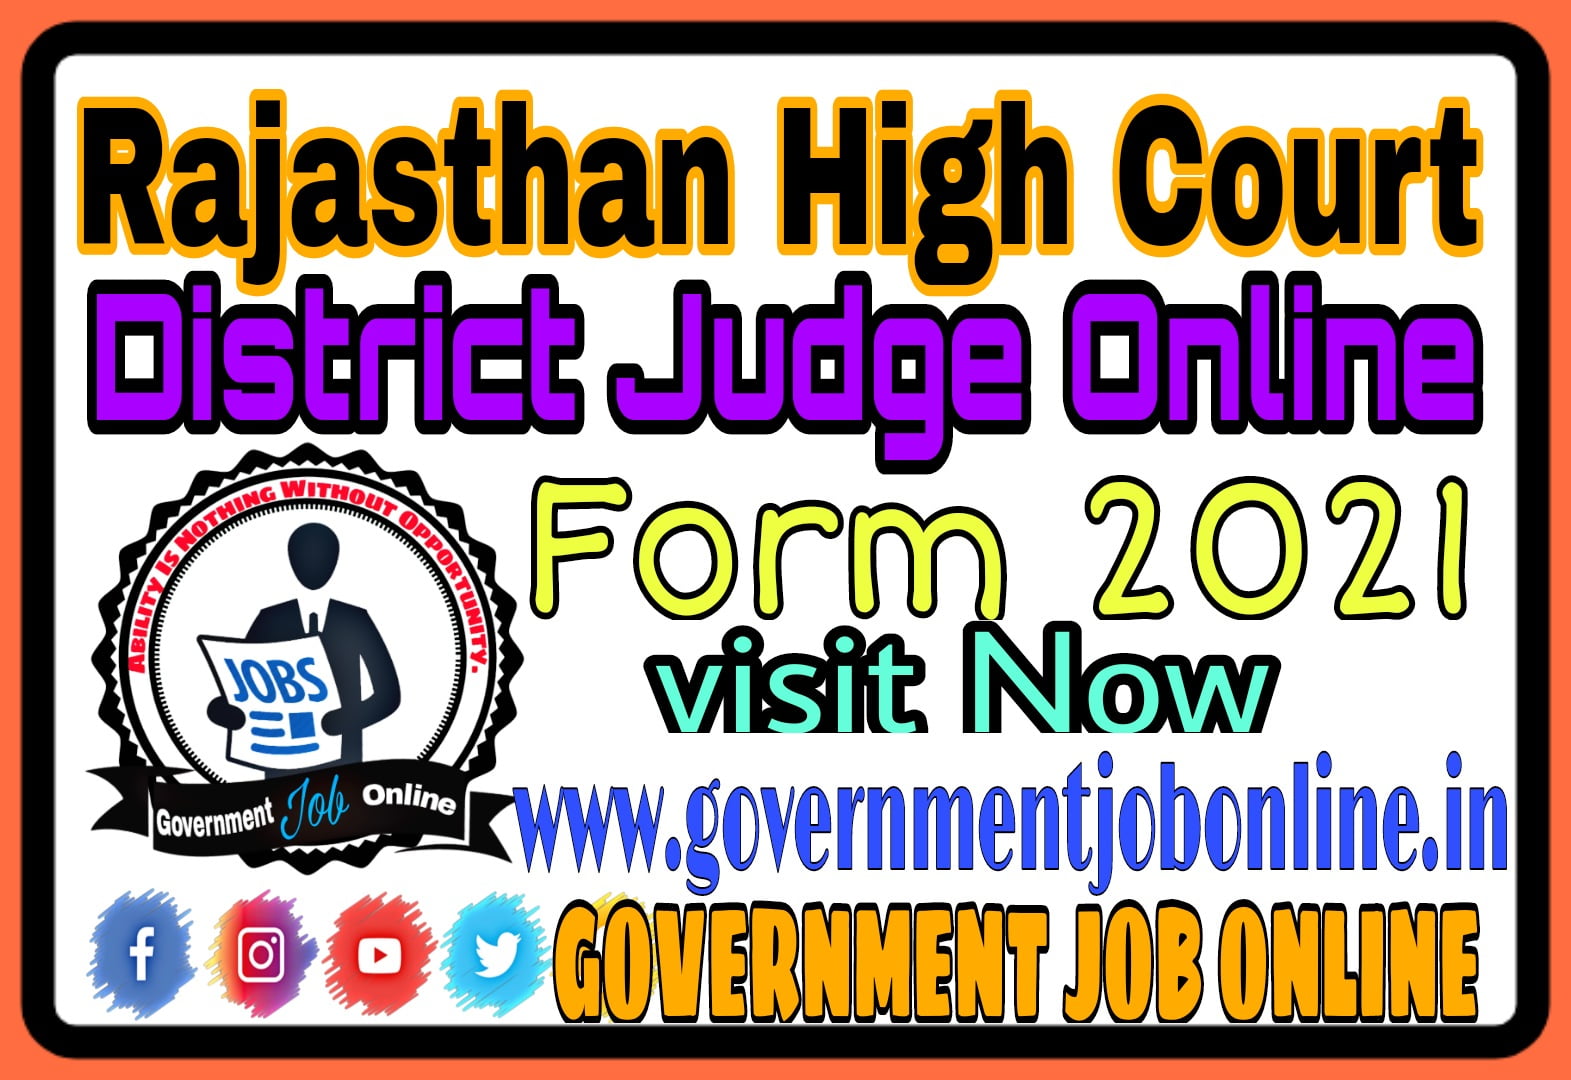 Rajasthan HC District Judge Online Form 2021